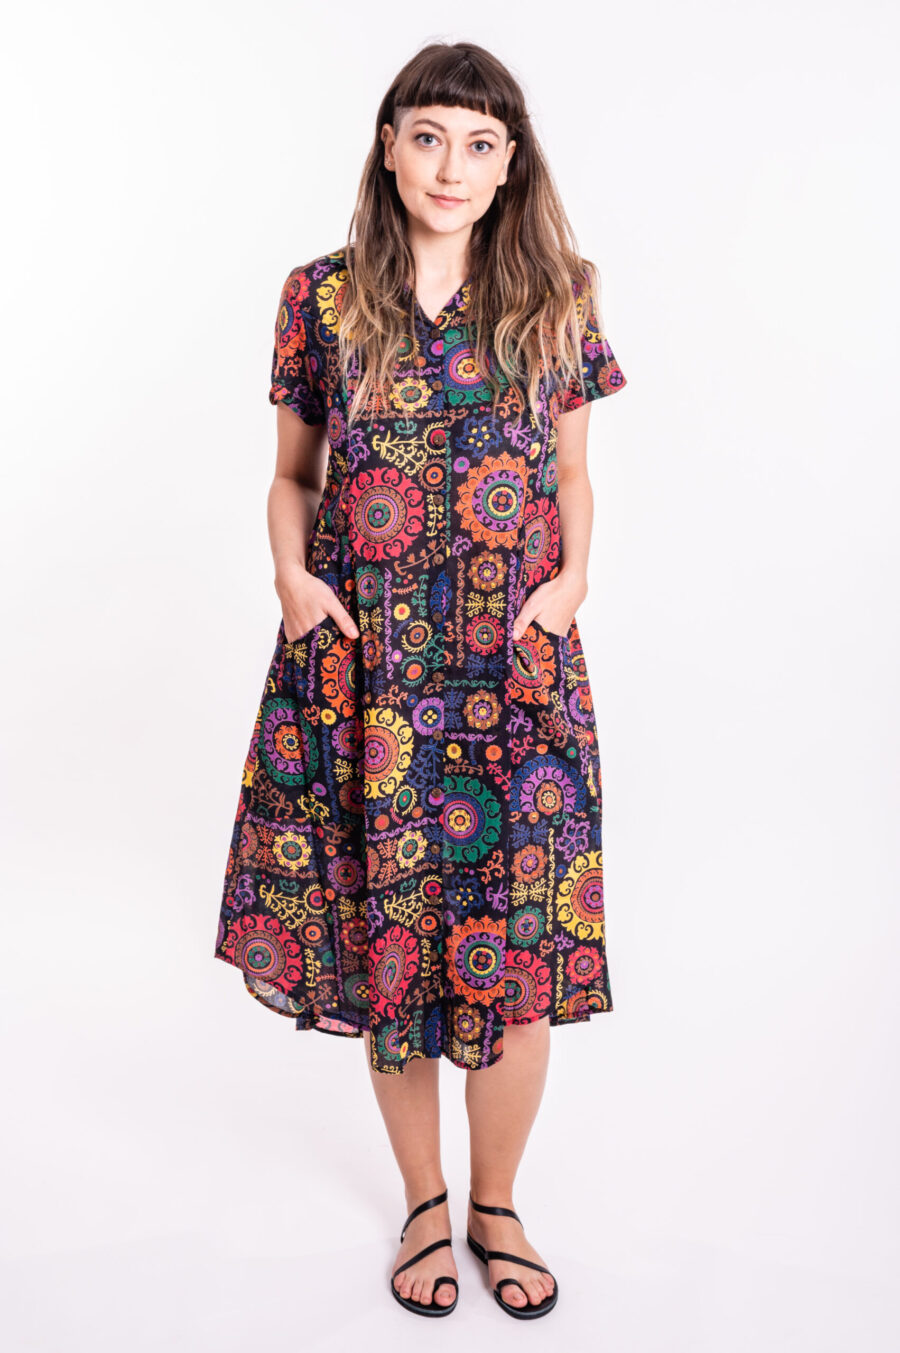 Aiya’le dress | Uniquely designed oversize dress - black dress with a colorful mandala print